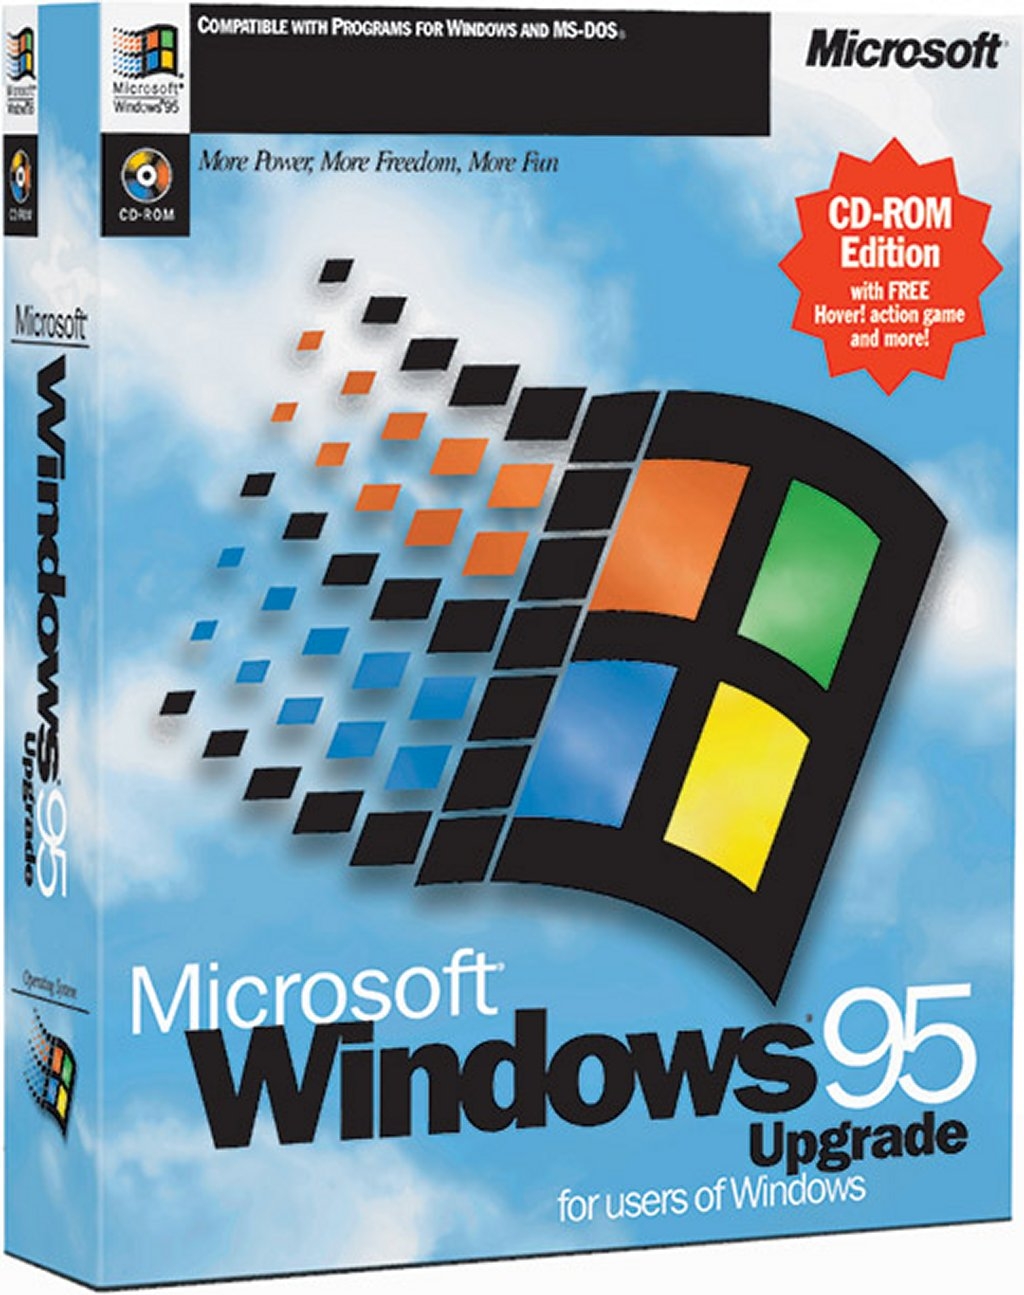 98 software download